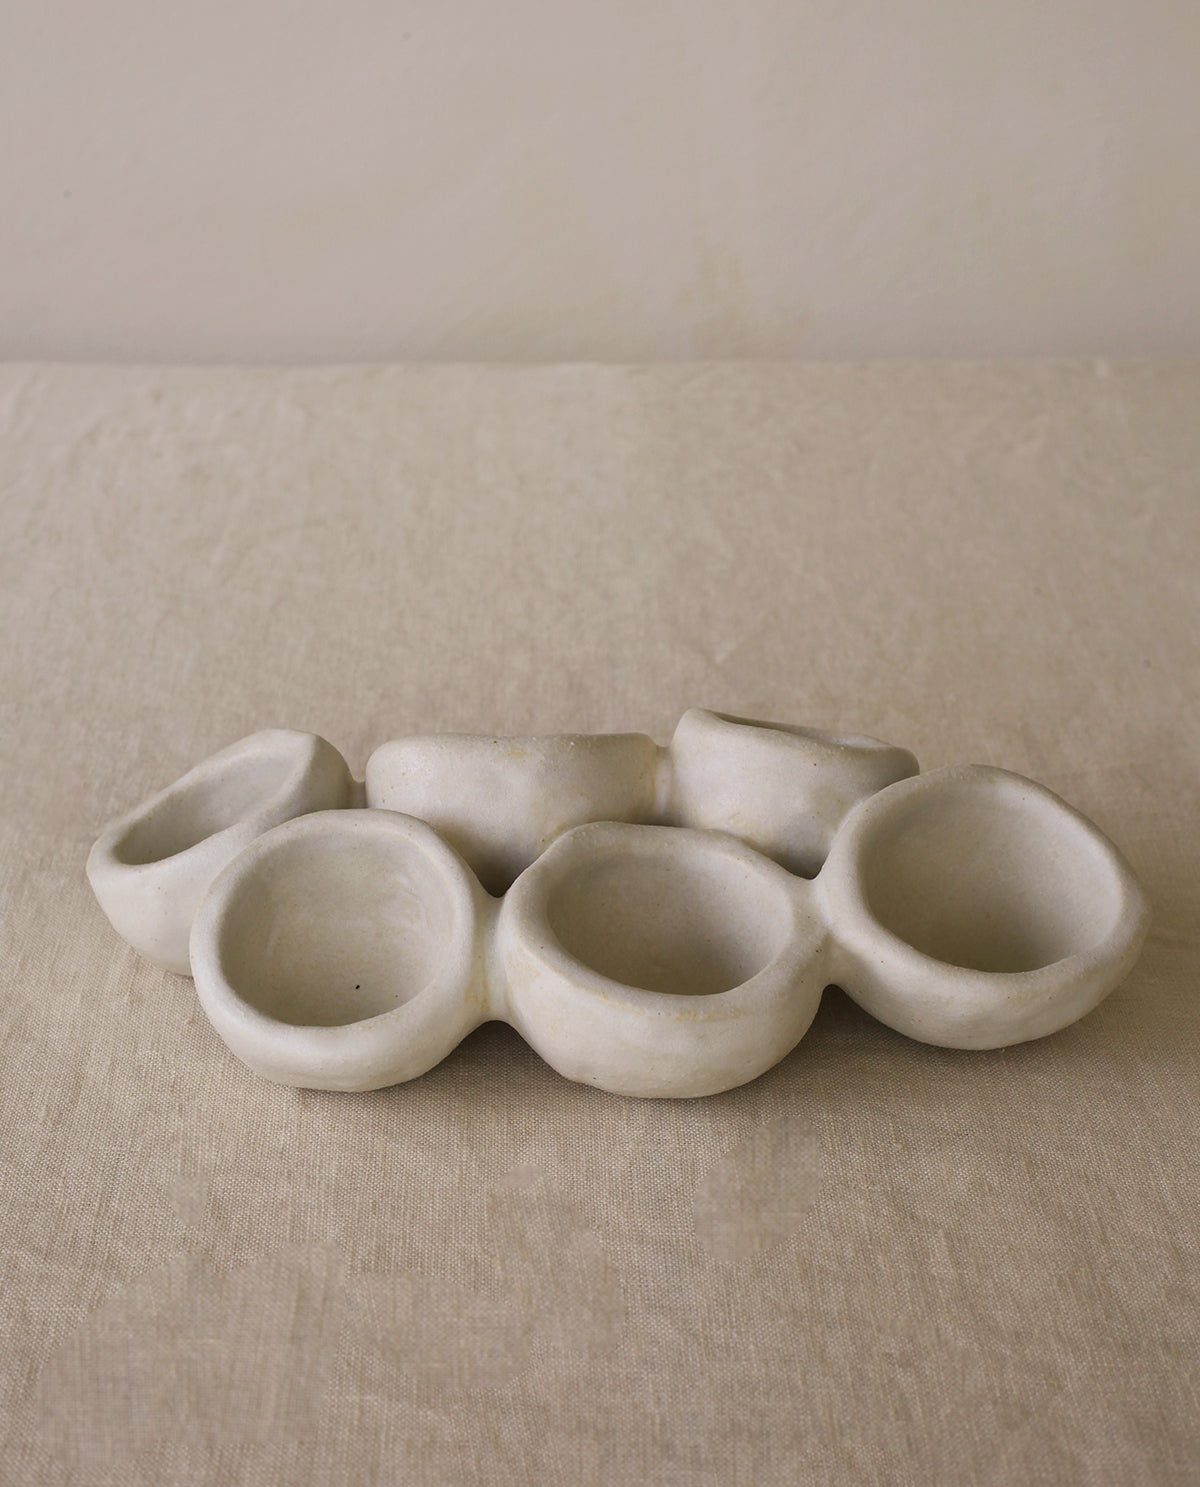 Handmade ceramic plate by INI CERAMIQUE featuring an original organic design and matte cream finish